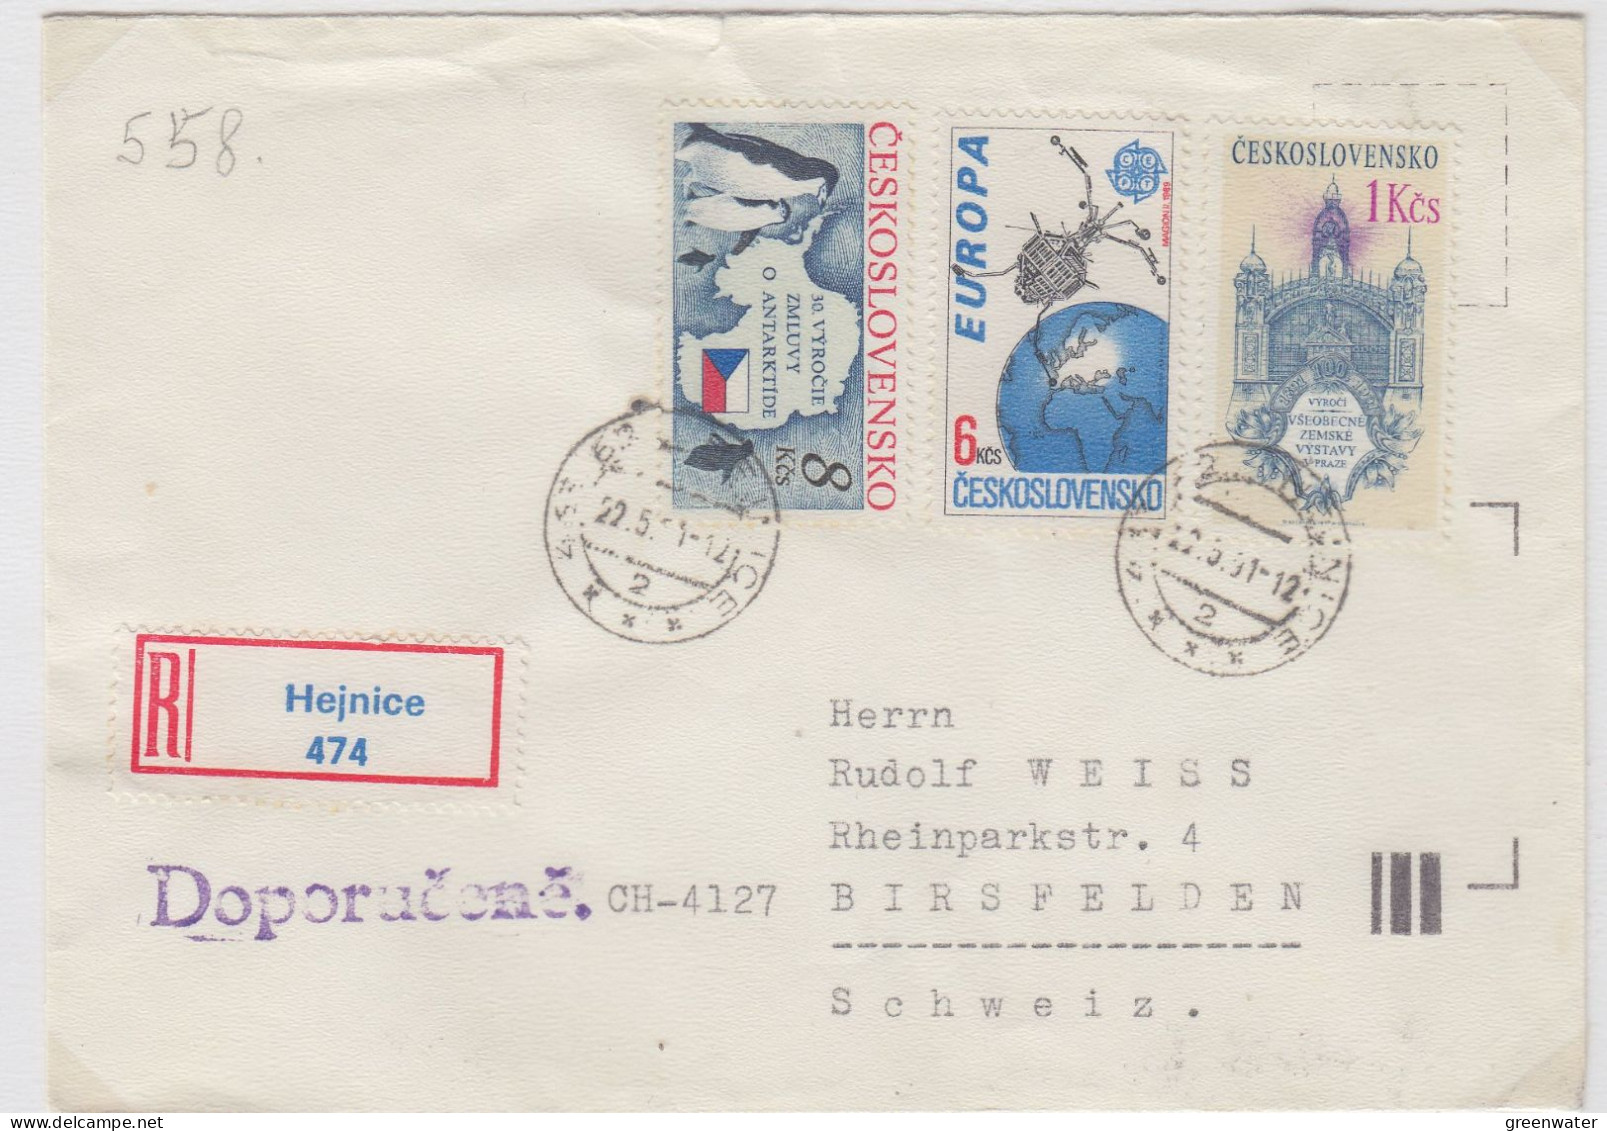 Czech Republic Registered Letter With  Antarctic Treaty Stamp Ca Hejnice 22.5.1991 (IN165) - Antarktisvertrag